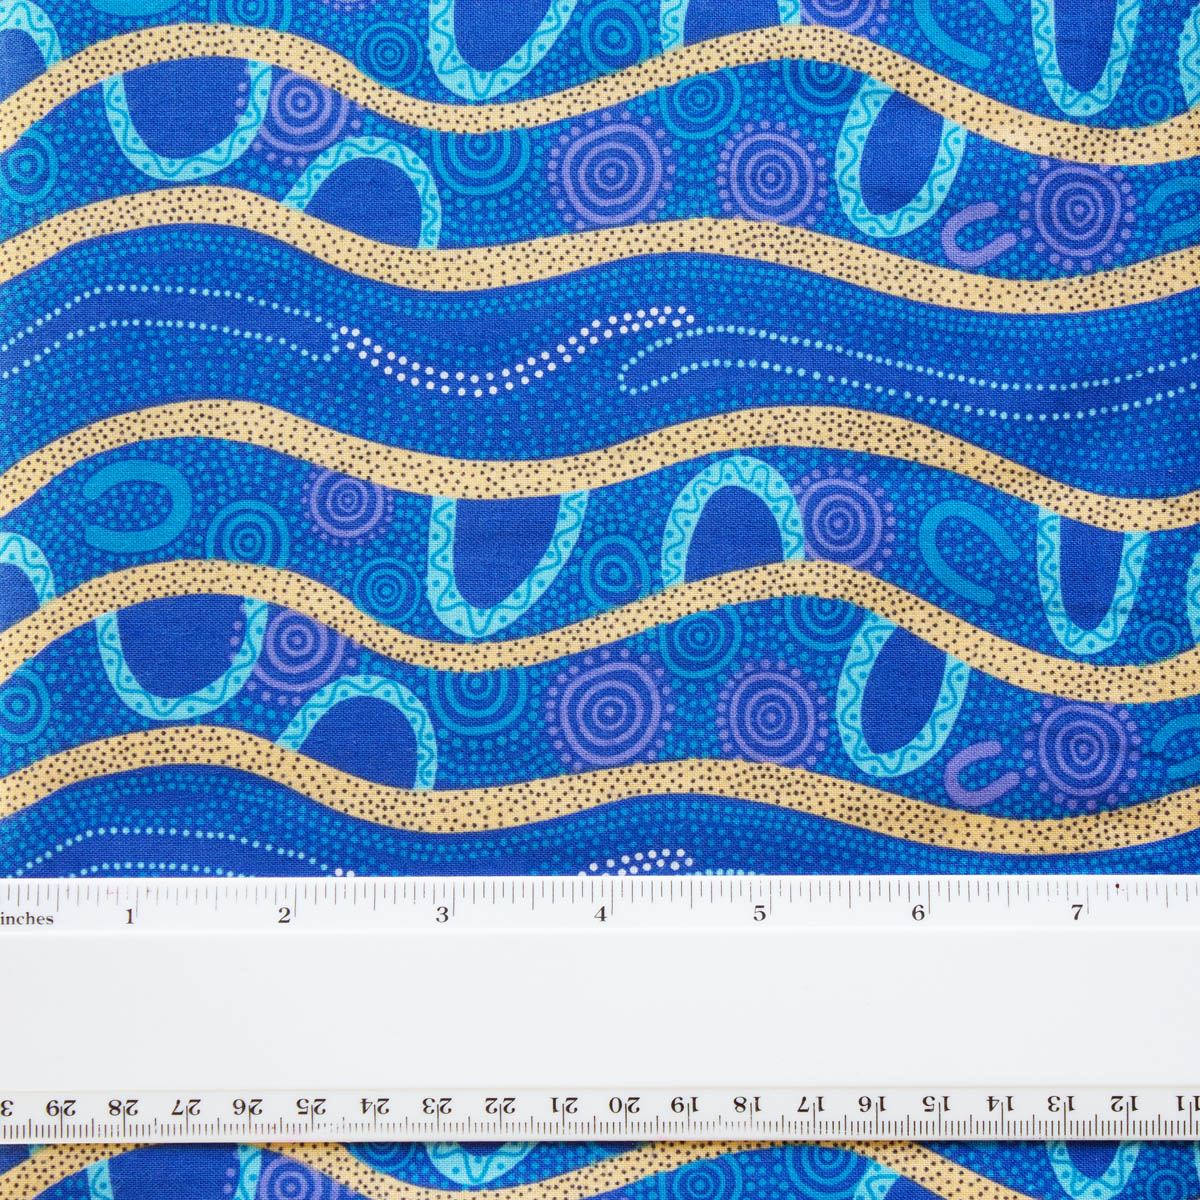 GATHERING BY THE RIVER BLUE by Australian Aboriginal Artist BARBARA EGAN